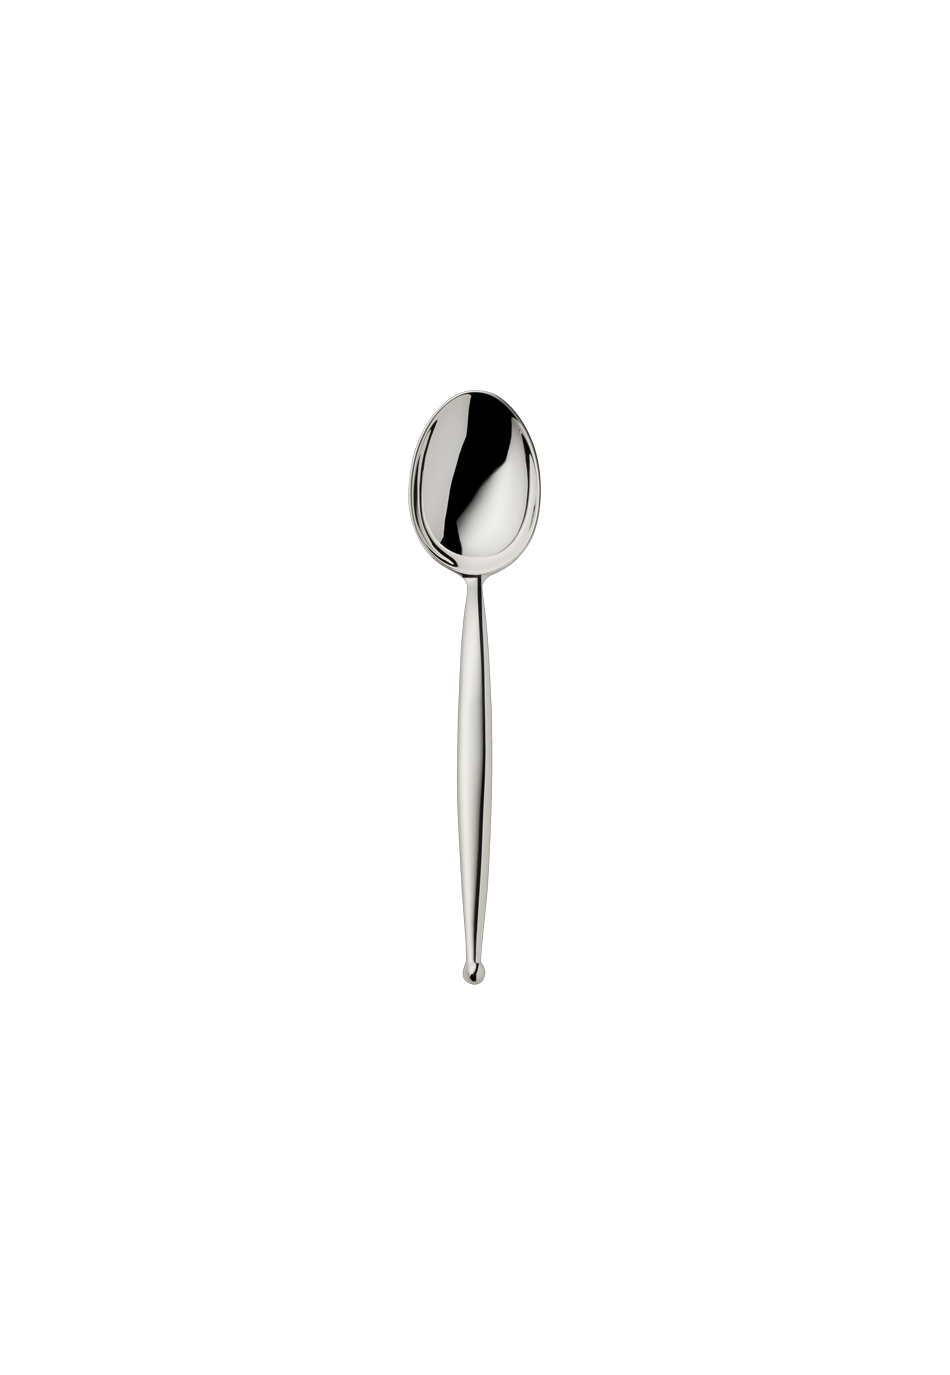 Gio Coffee Spoon 13,0 Cm (150g massive silverplated)